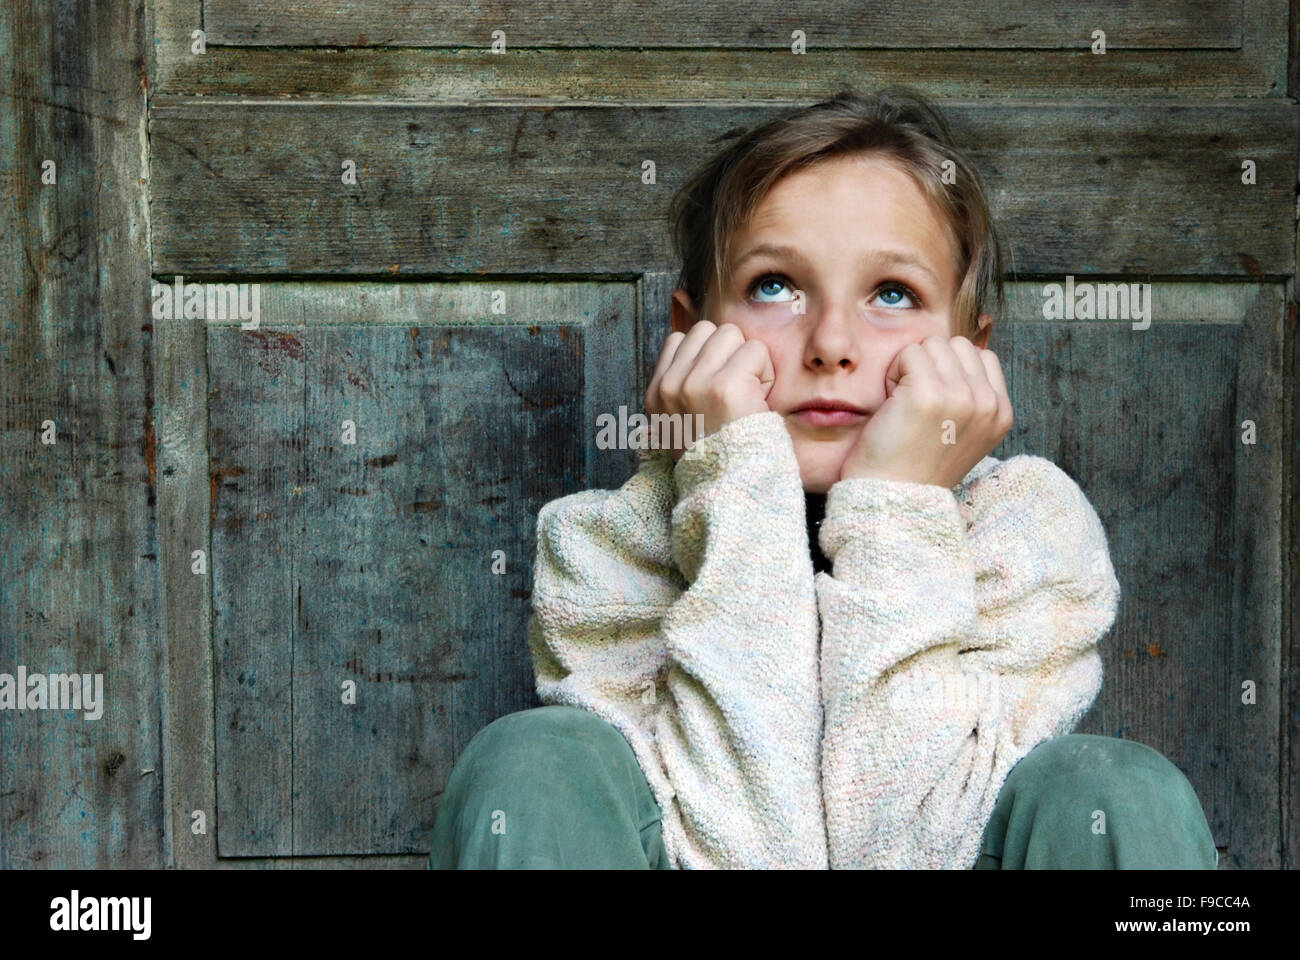 Sad little girl feels lonely. Stock Photo